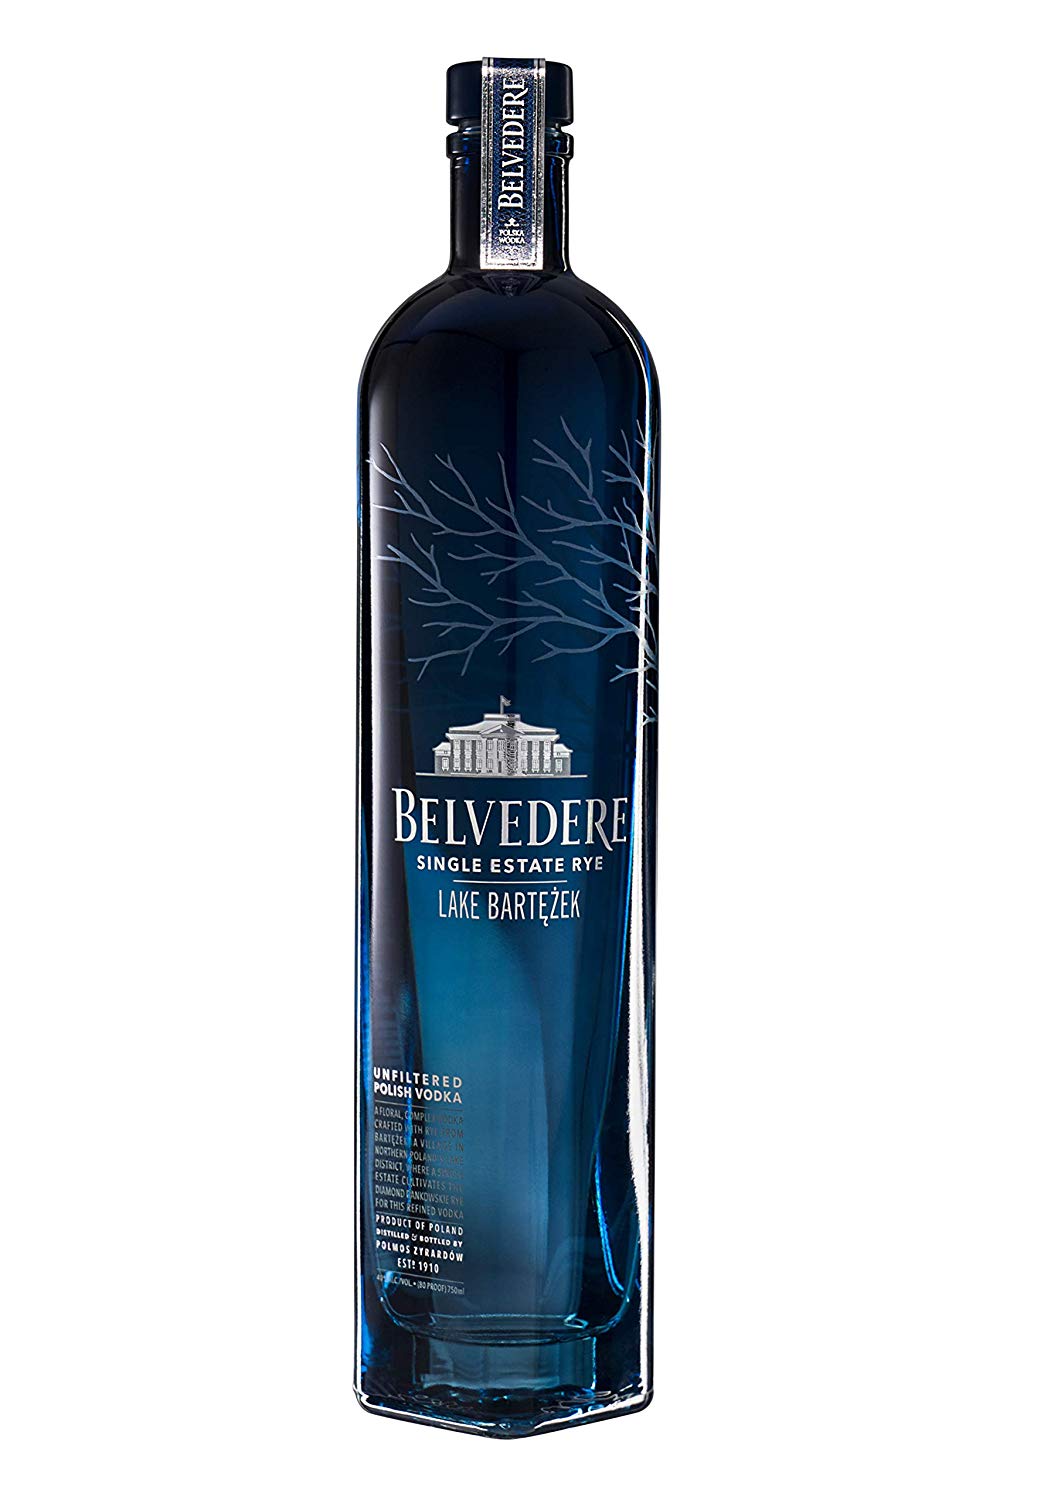 Belvedere Vodka, Unfiltered Polish, Lake - 750 ml